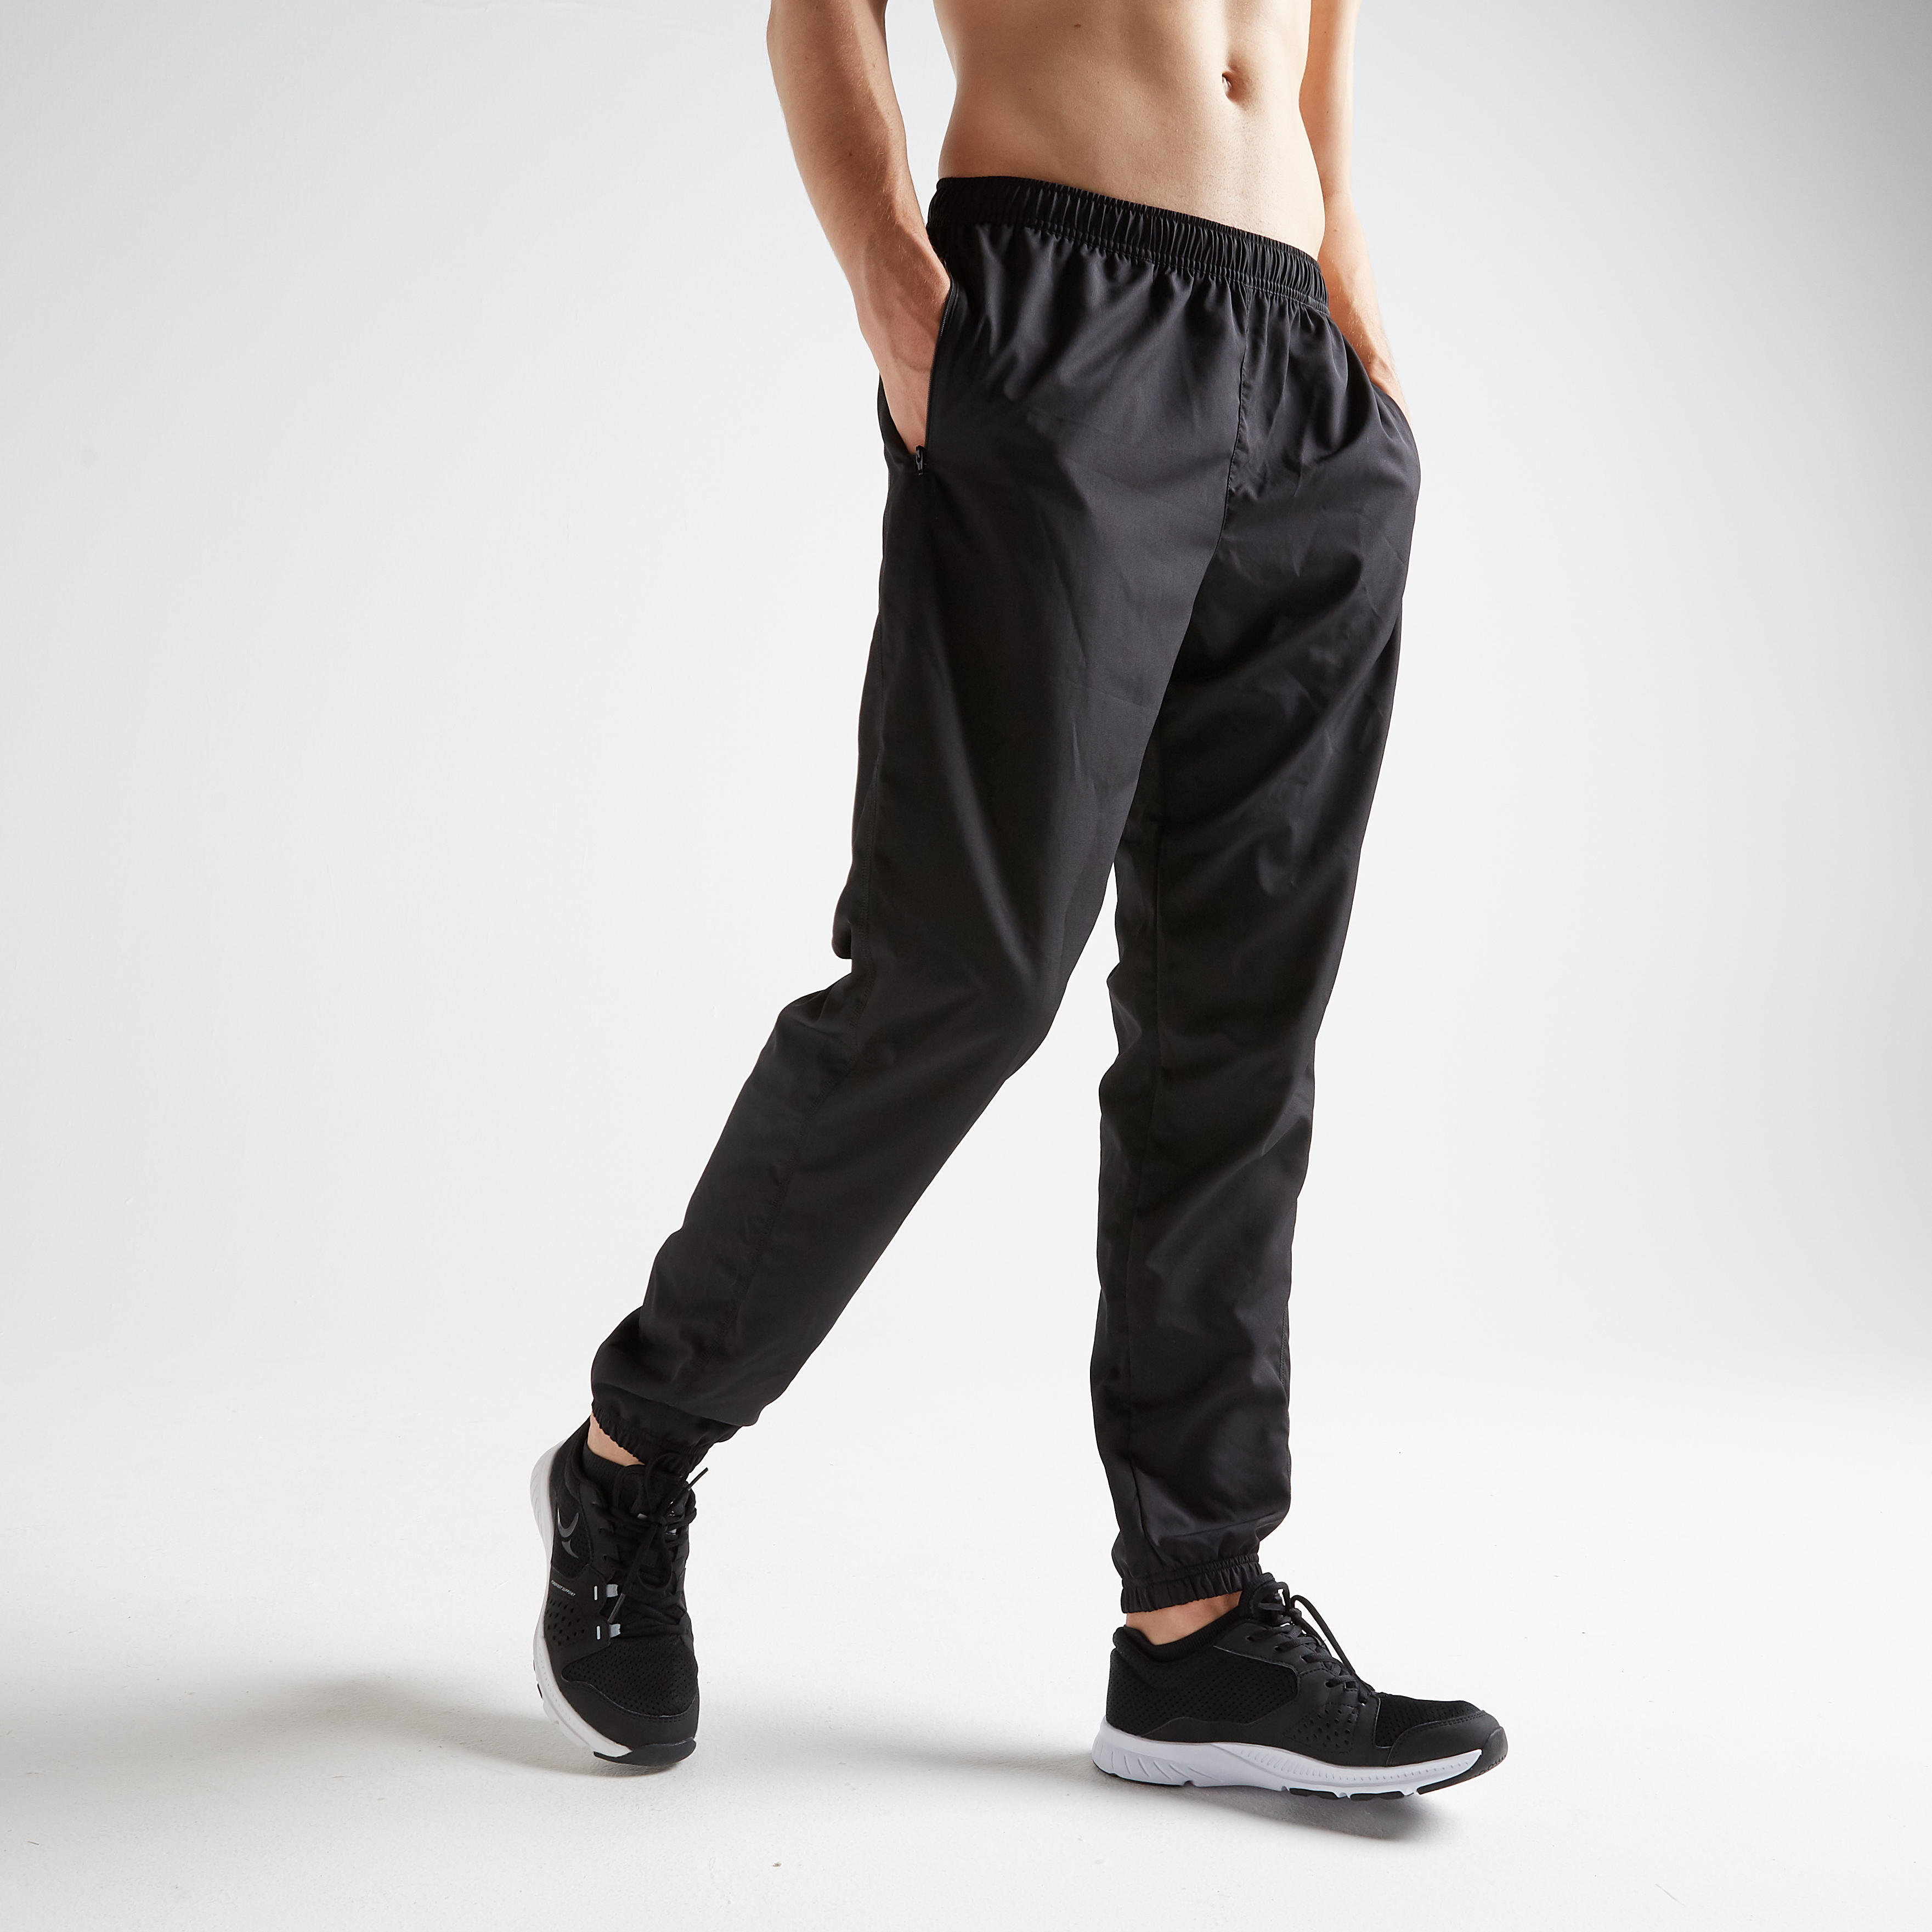 Mens' Track Pants - Joggers for Men Buy 